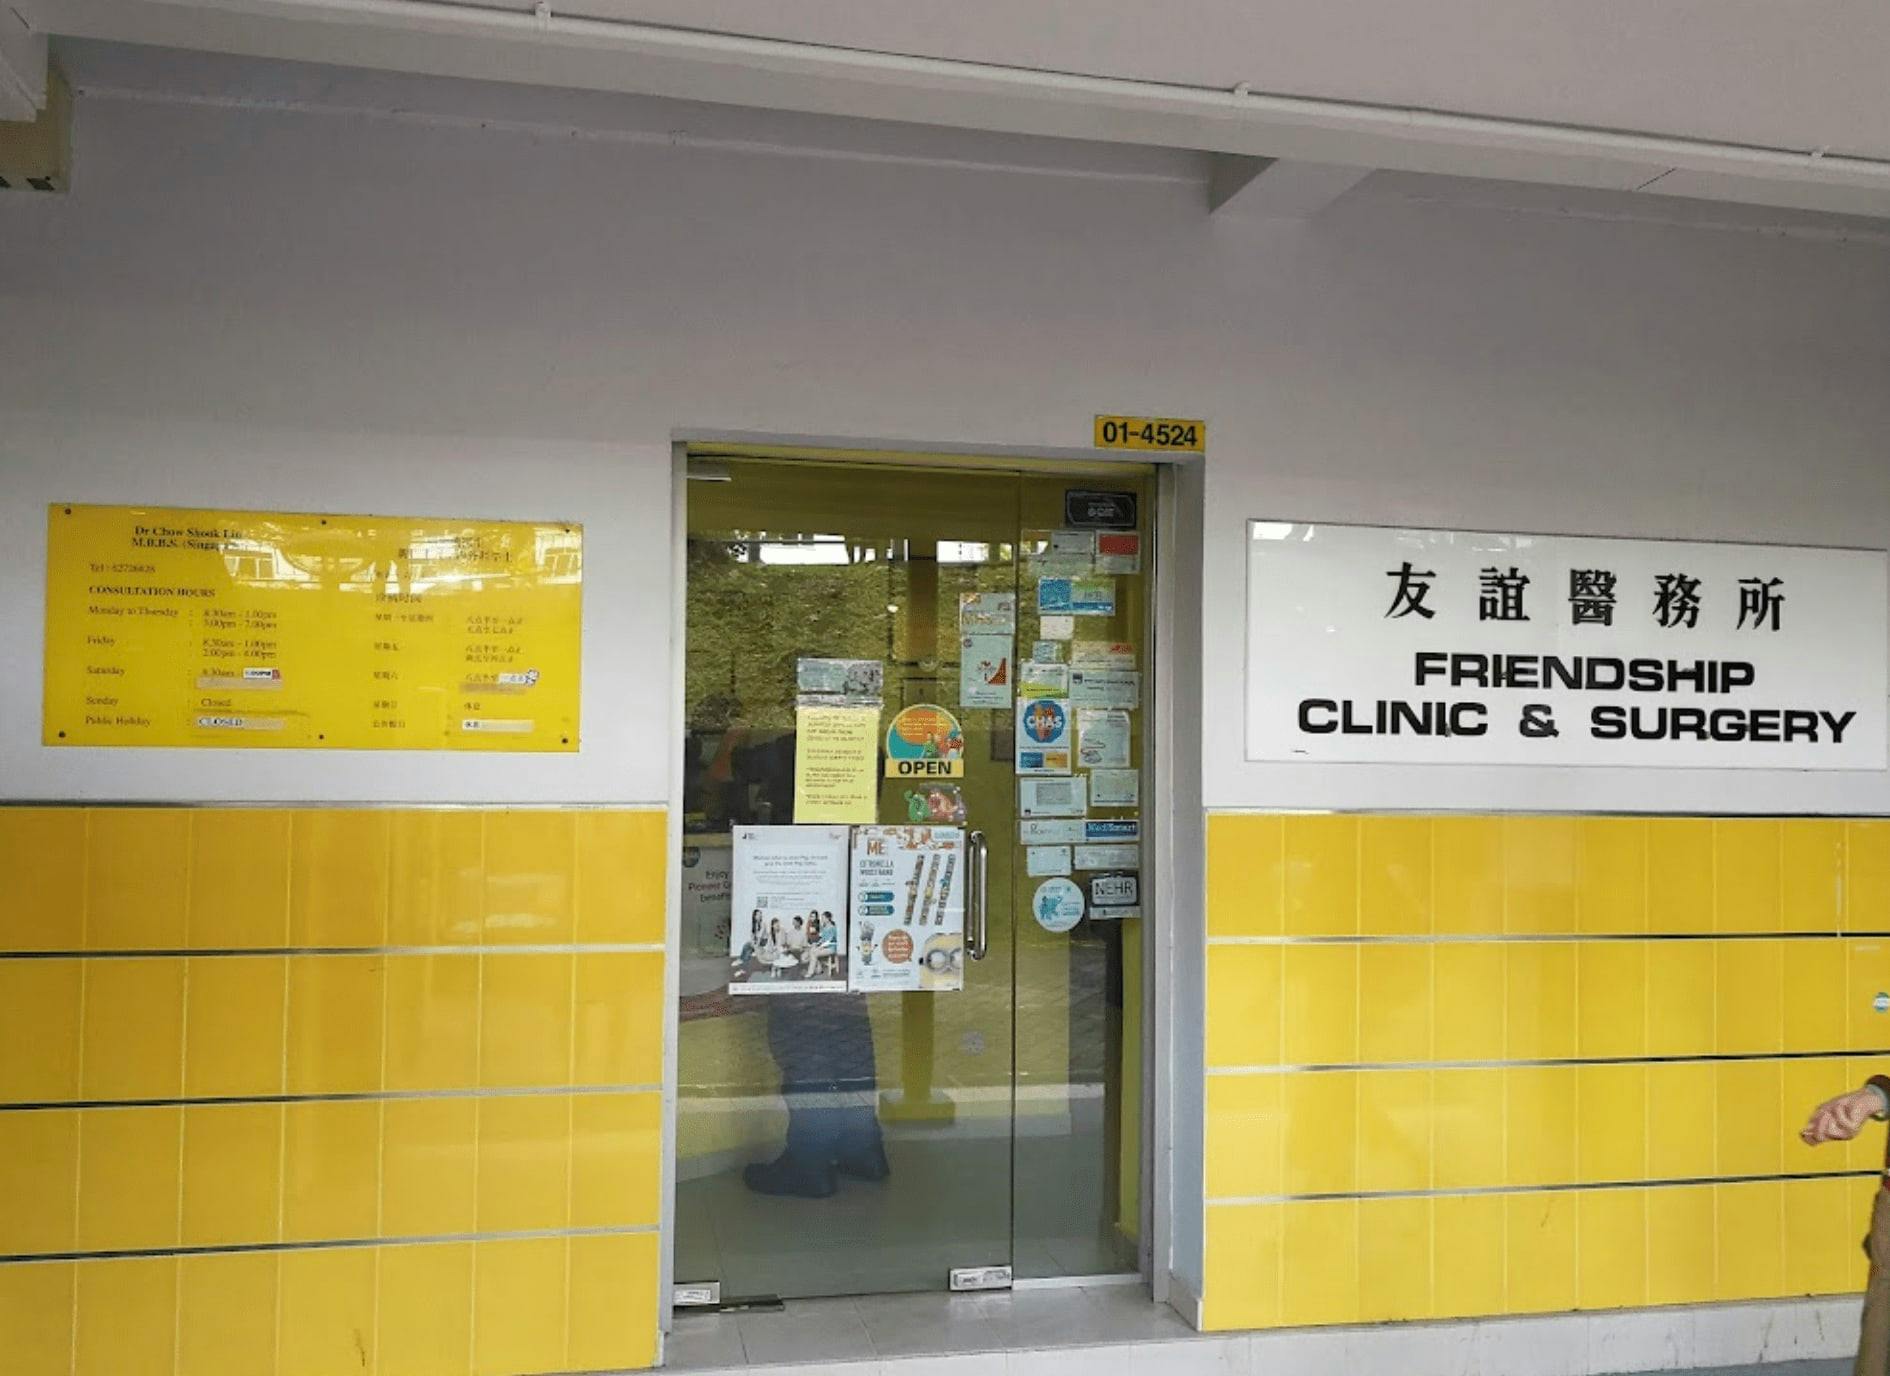 Friendship Clinic & Surgery